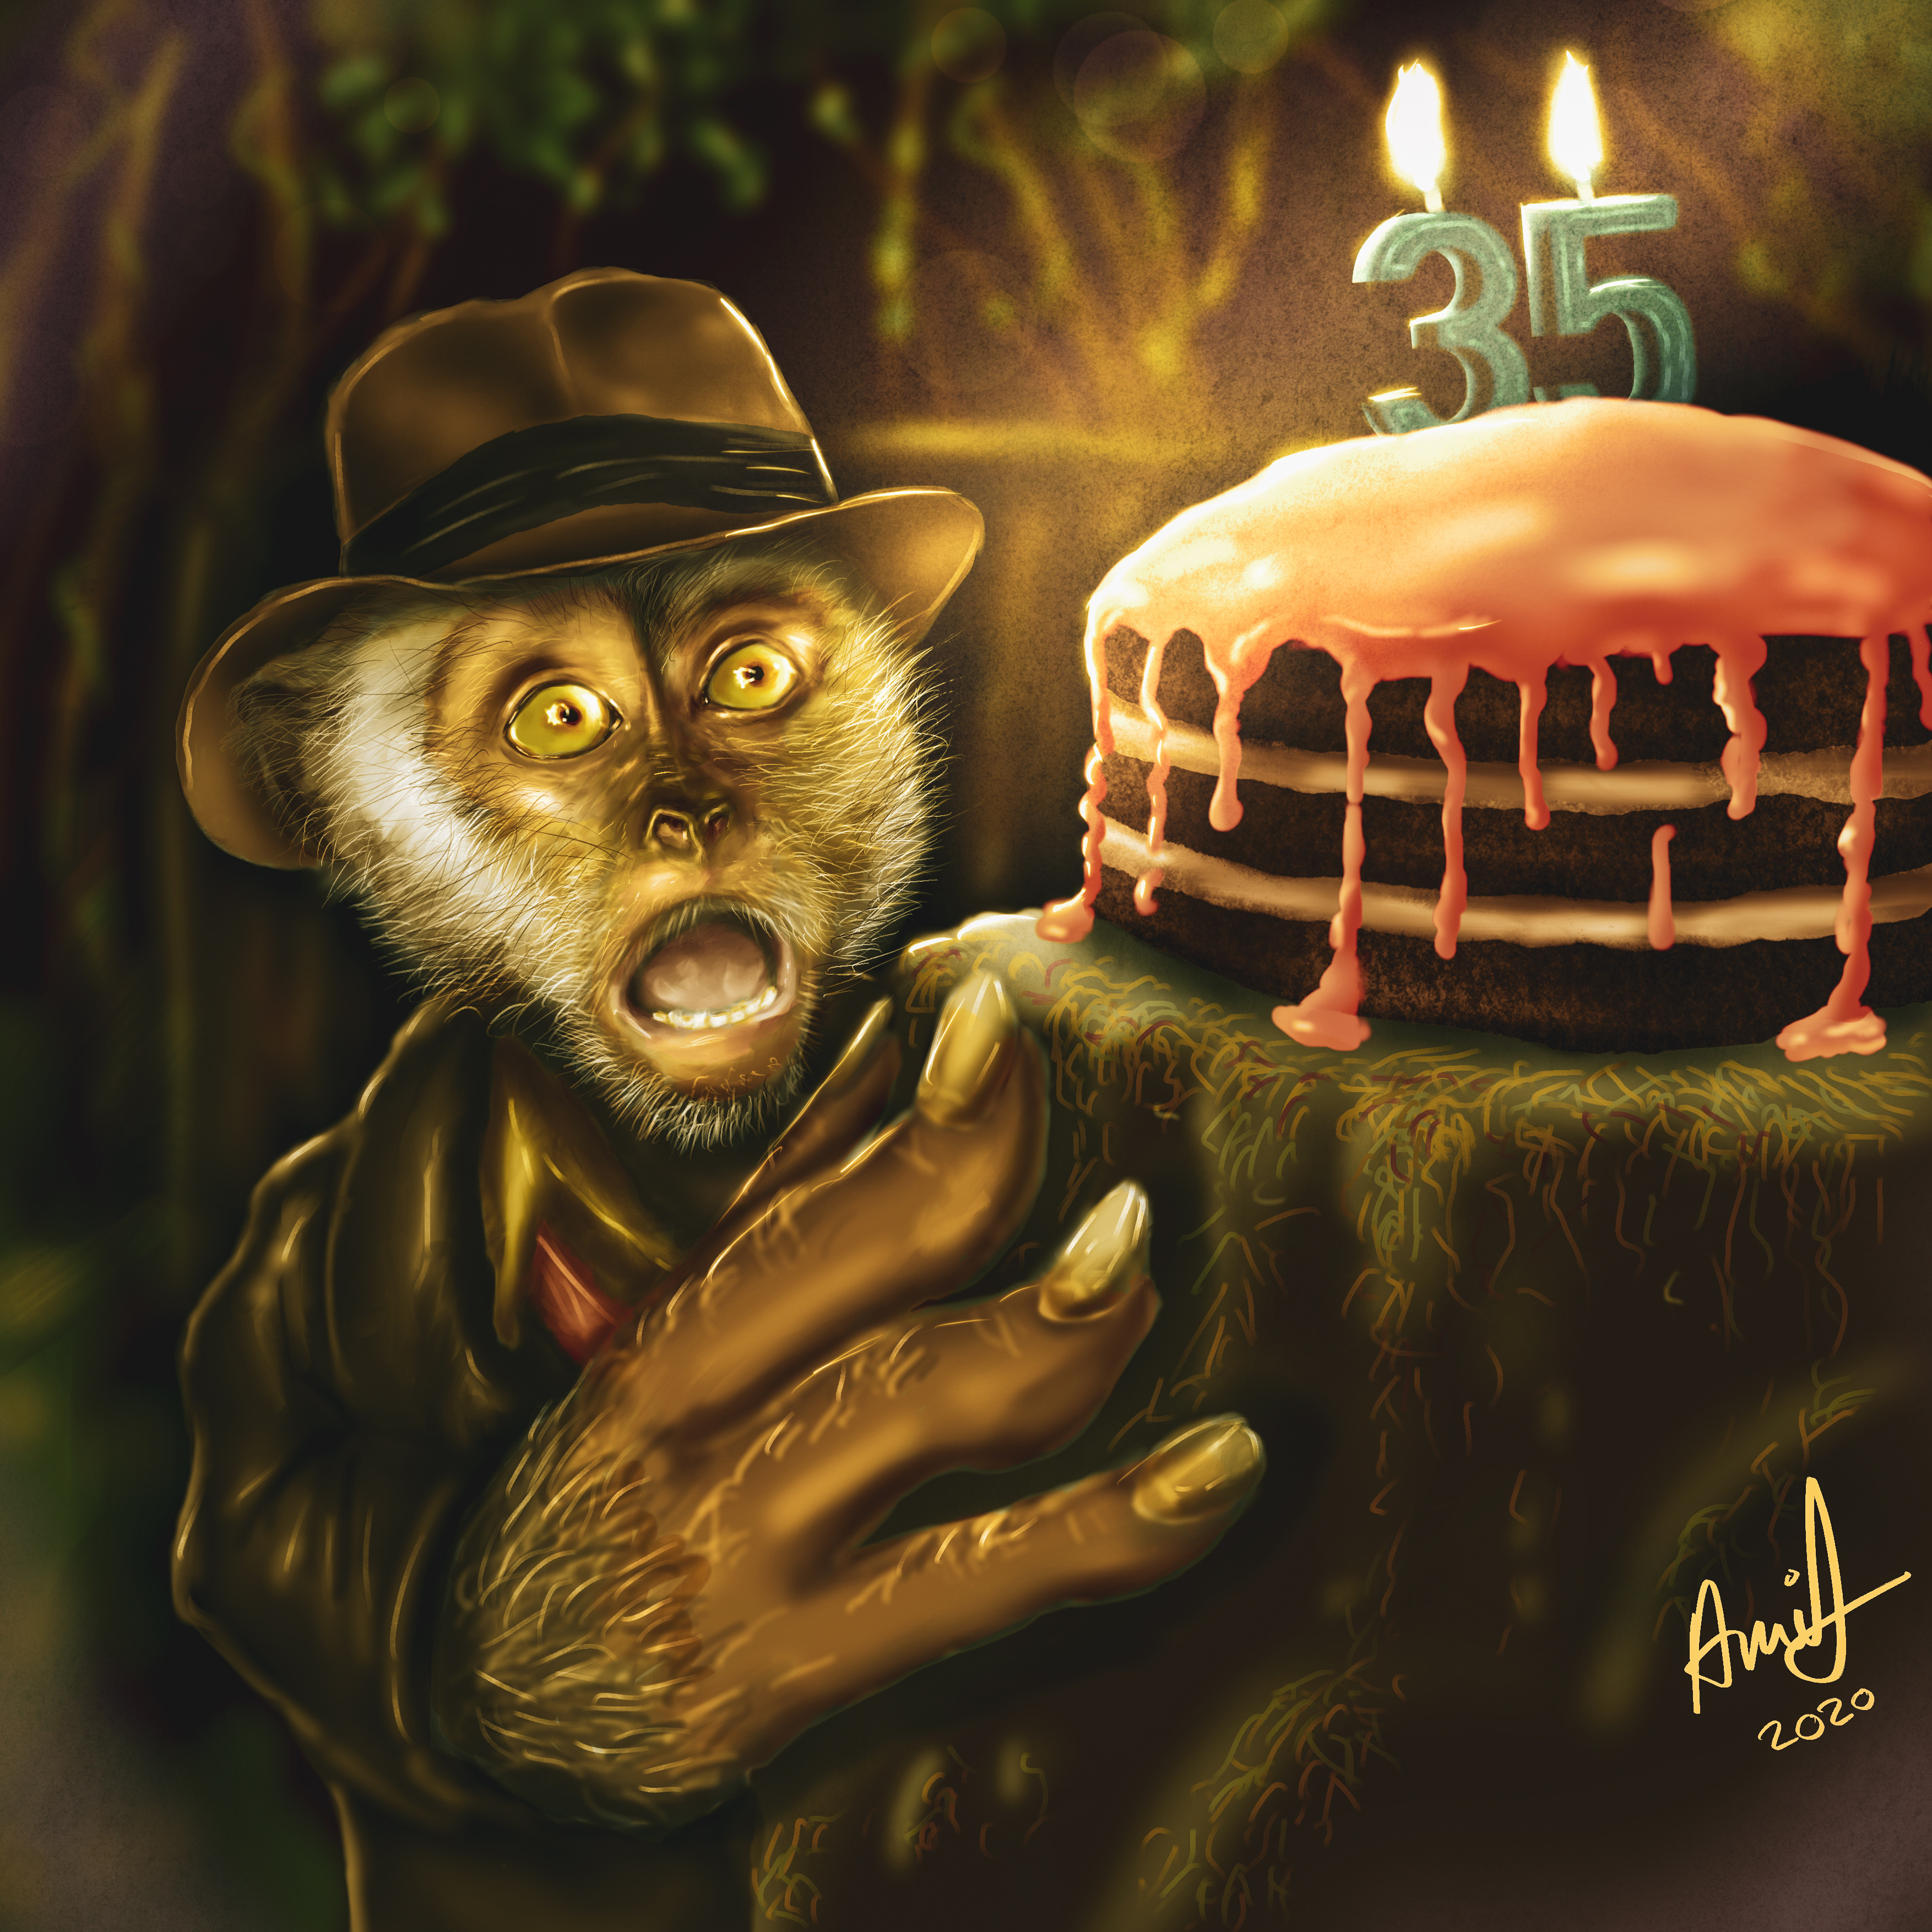 cheeky monkey stealing my birthday cake